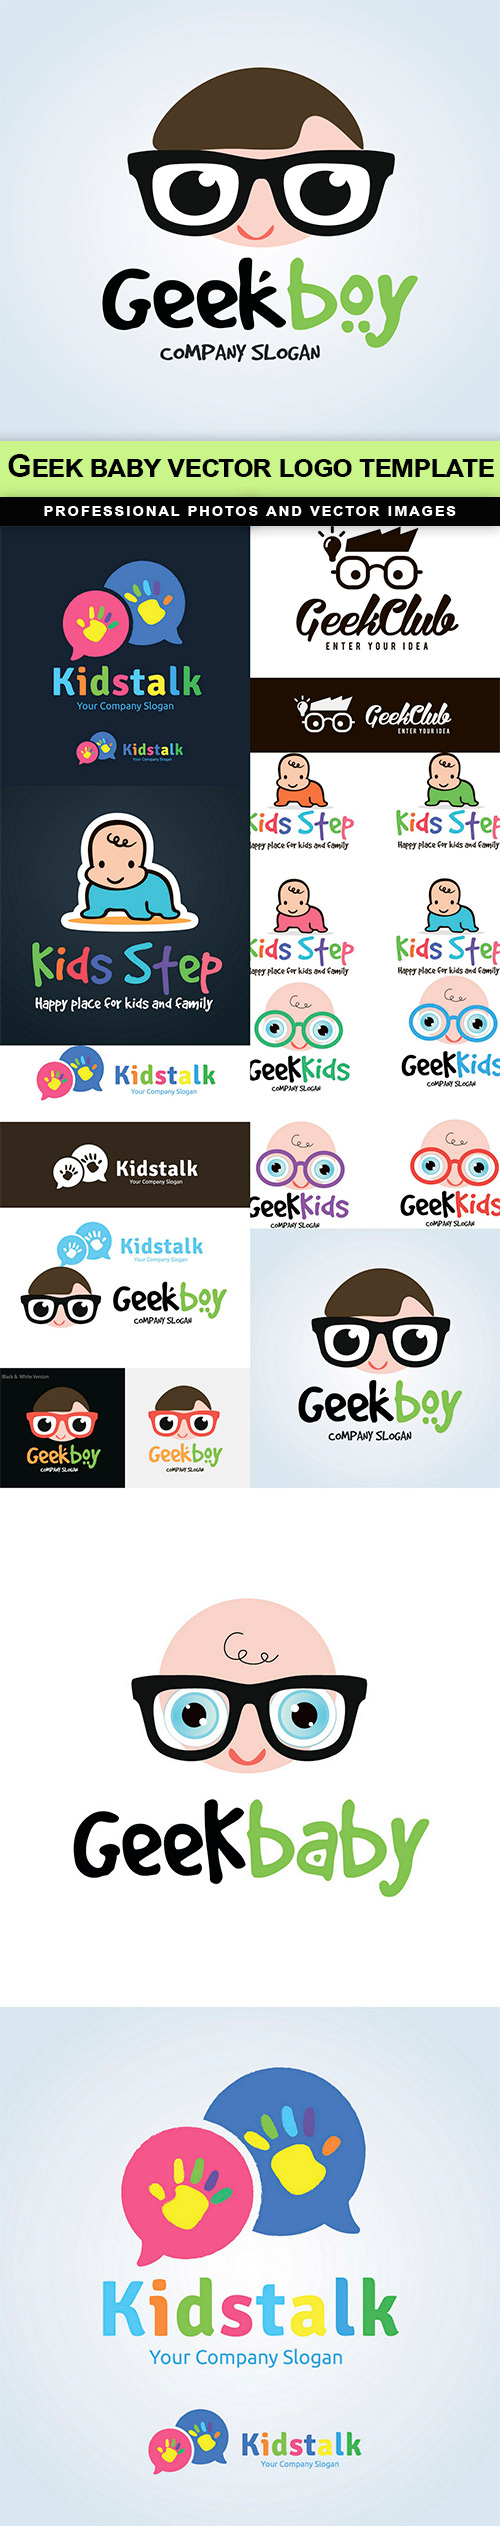 Geek baby vector logo template - 10 EPS